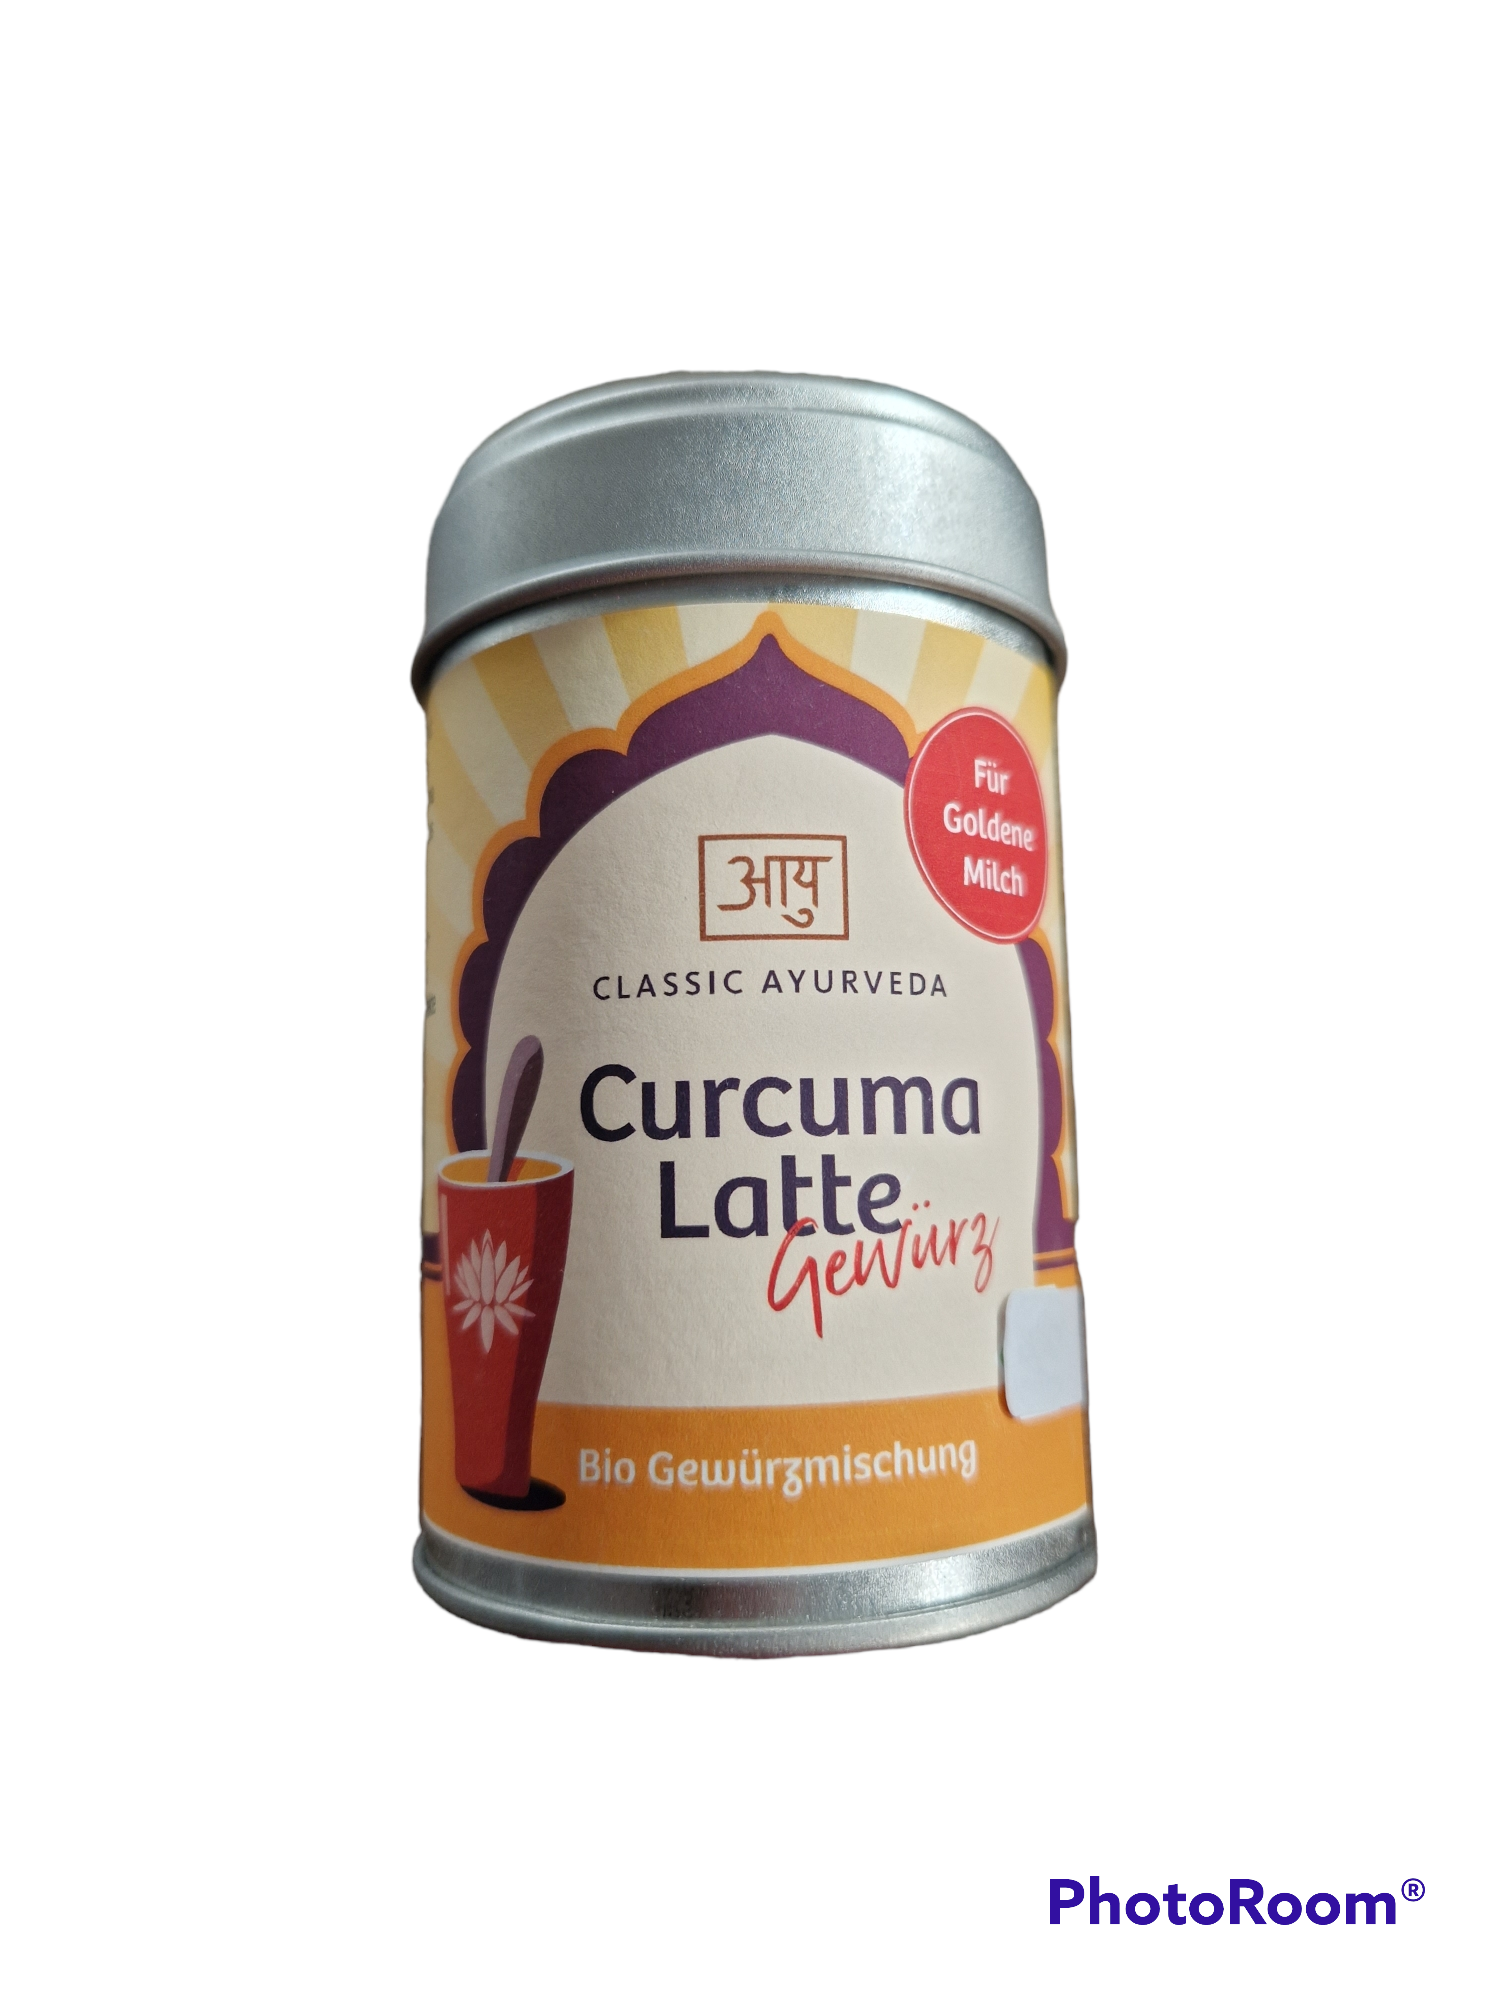 Guld mjölk - Golden milk - Curcuma latte